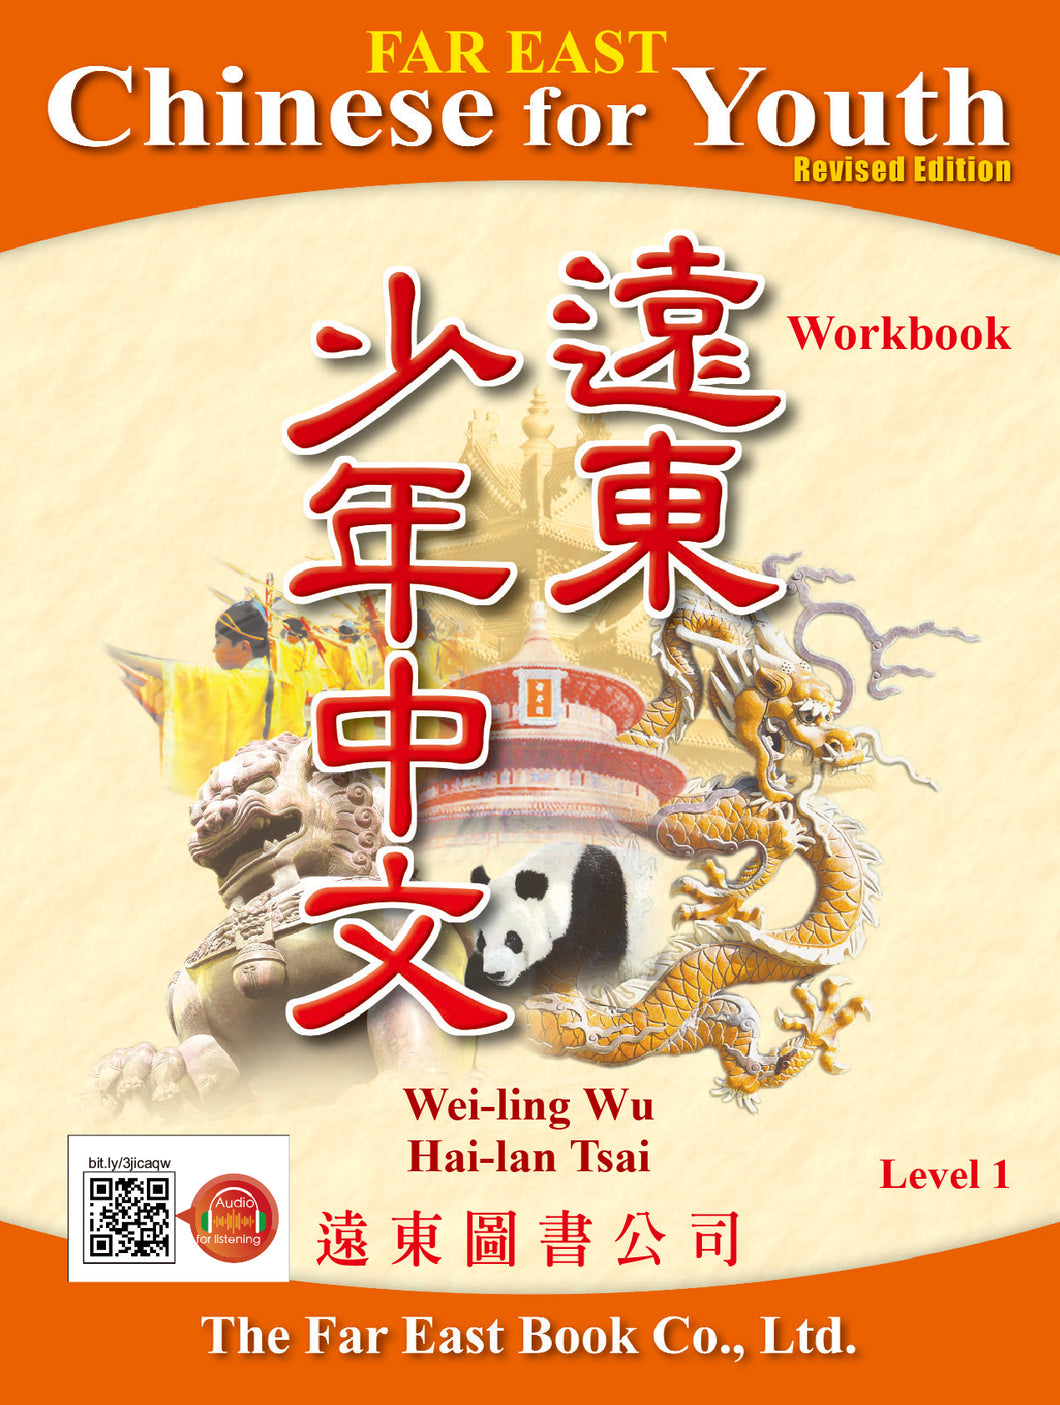 Far East Chinese for Youth Level 1 (Revised Edition) Workbook (Audio for listening)遠東少年中文 (第一冊) (修訂版) (作業本) (線上音檔版)